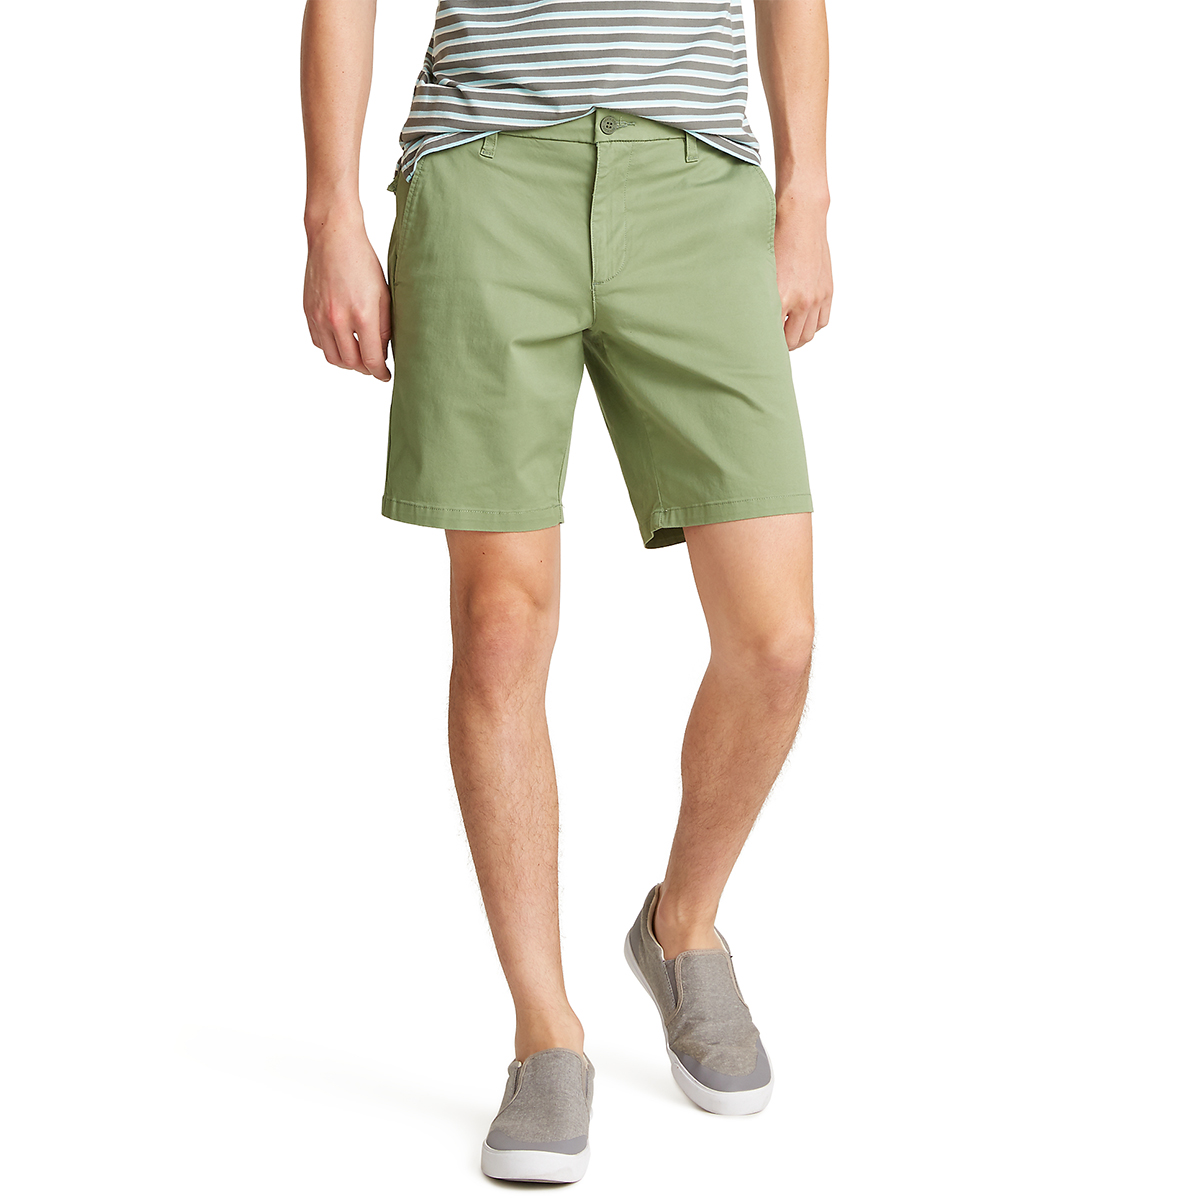 Dockers Men's Ultimate Straight Fit Short - Green, 32